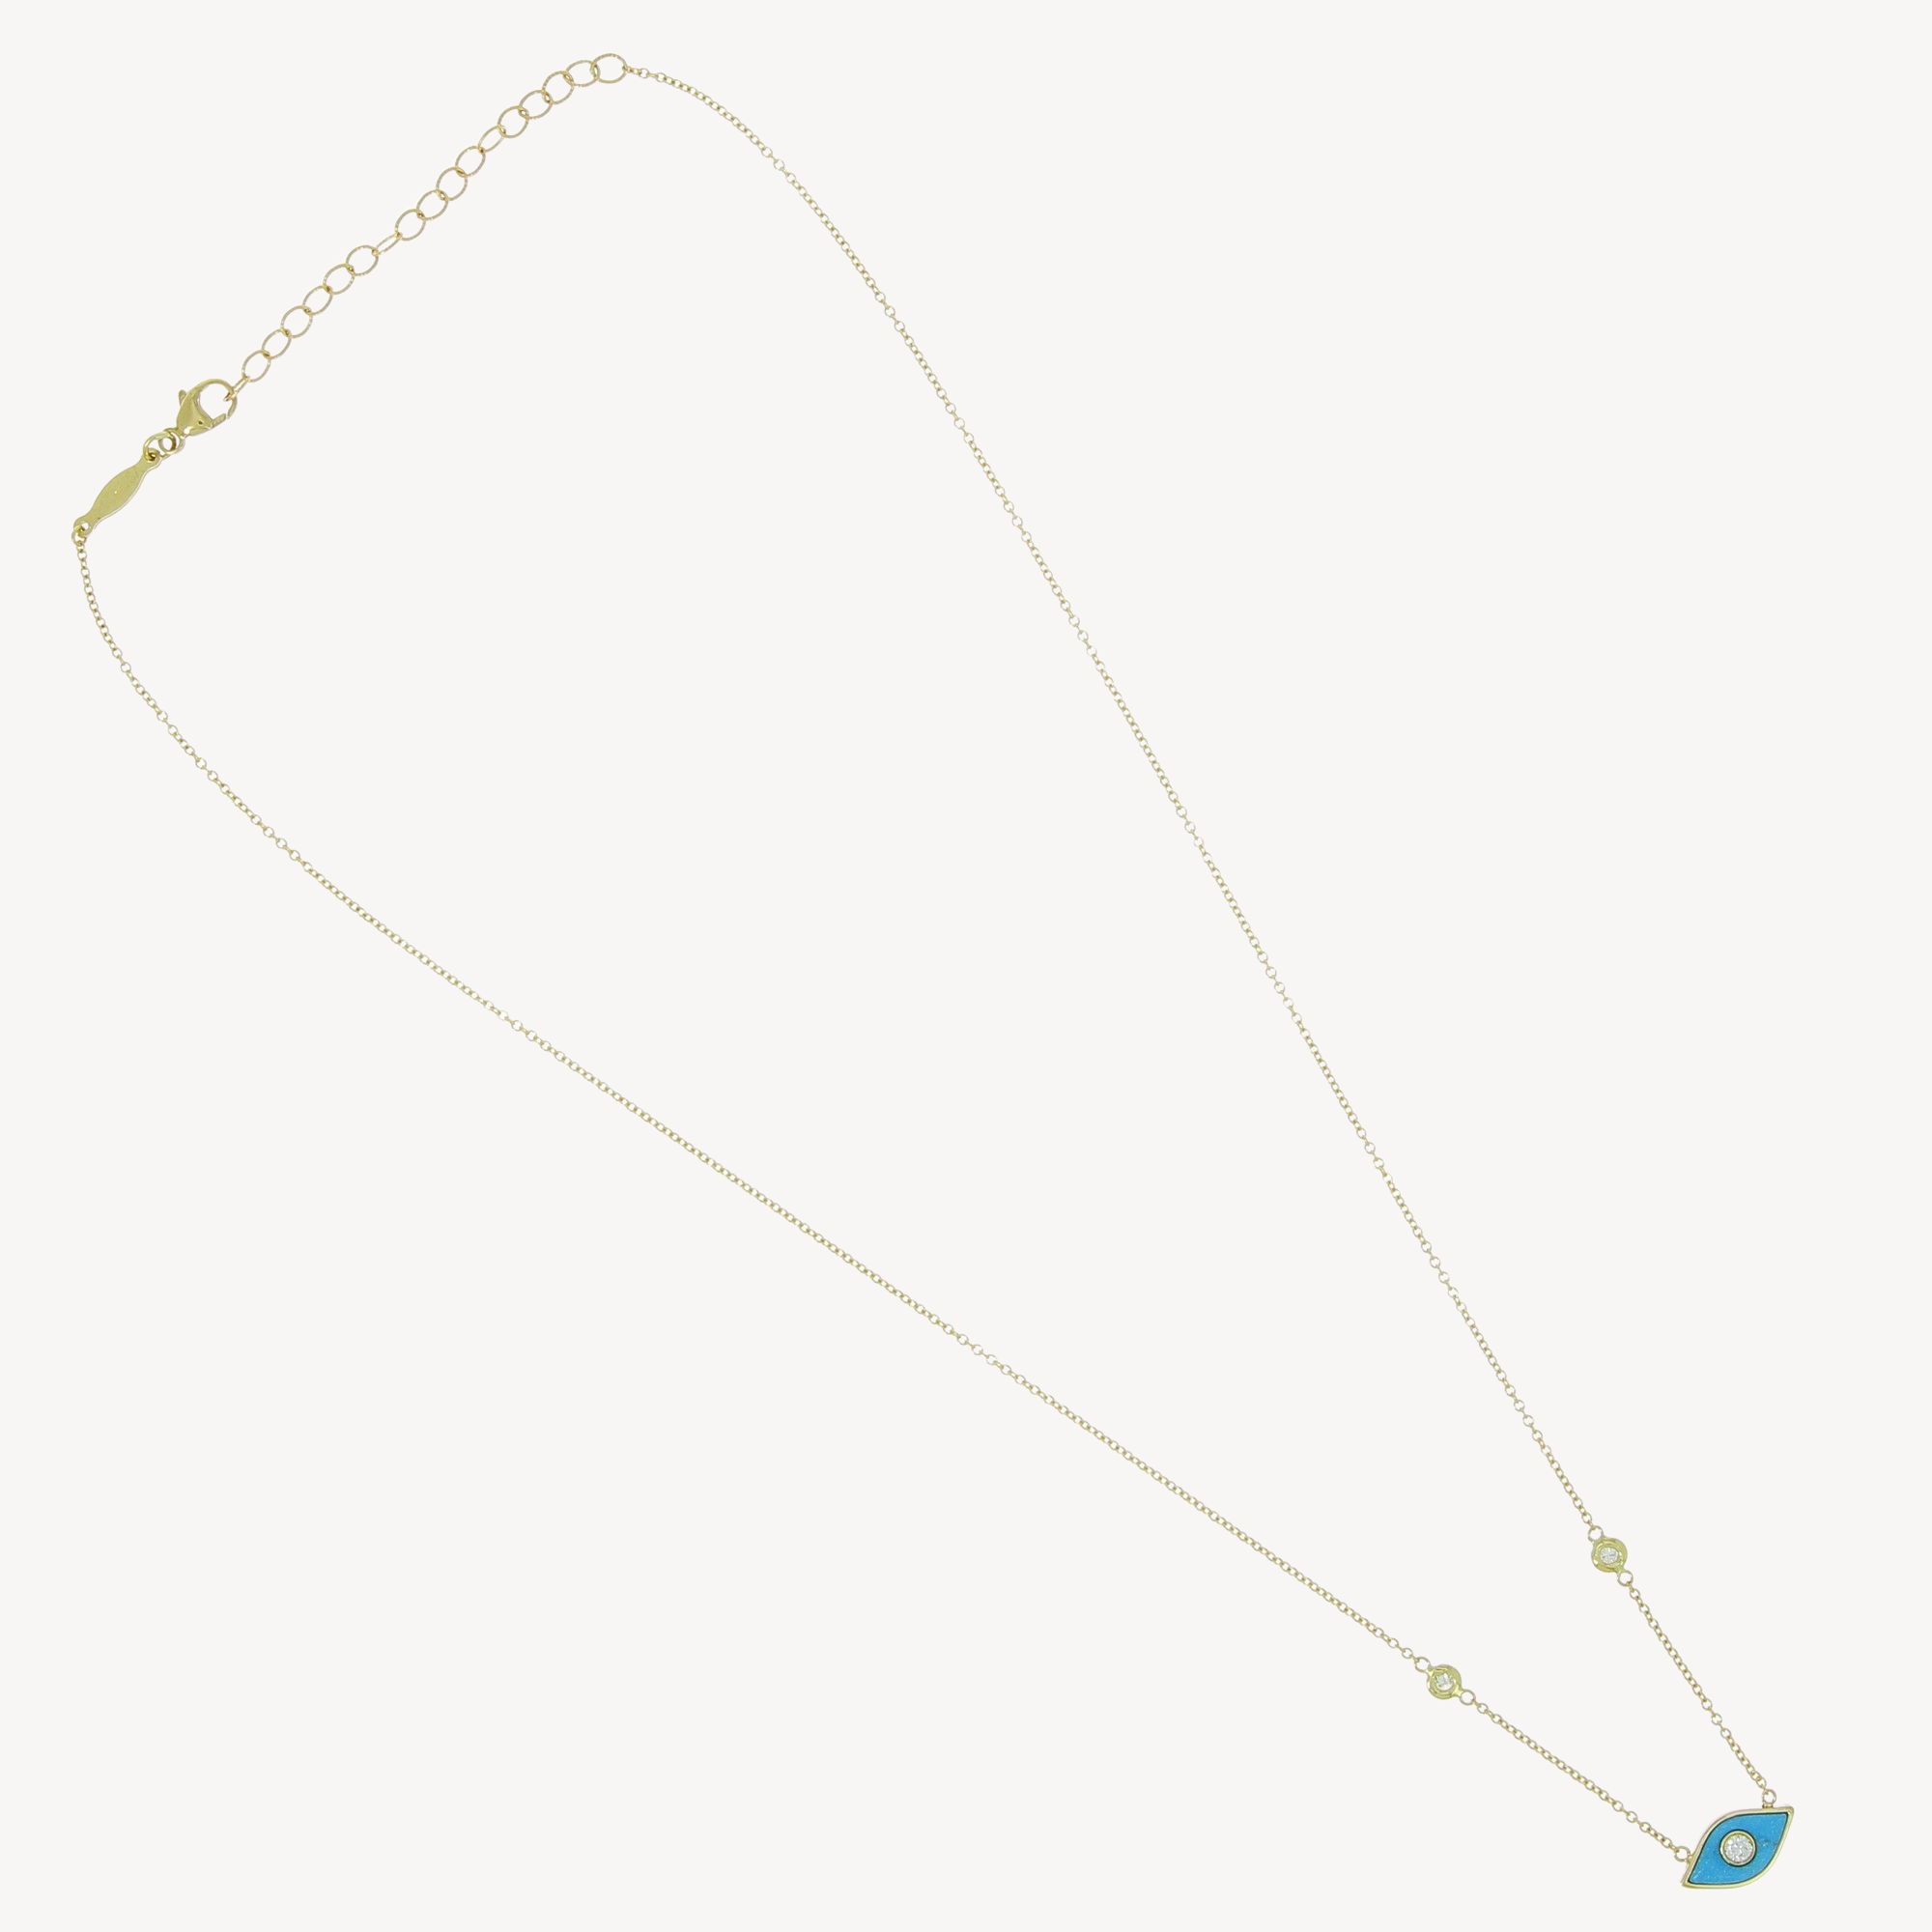 Yellow gold diamond center turquoise eye necklace